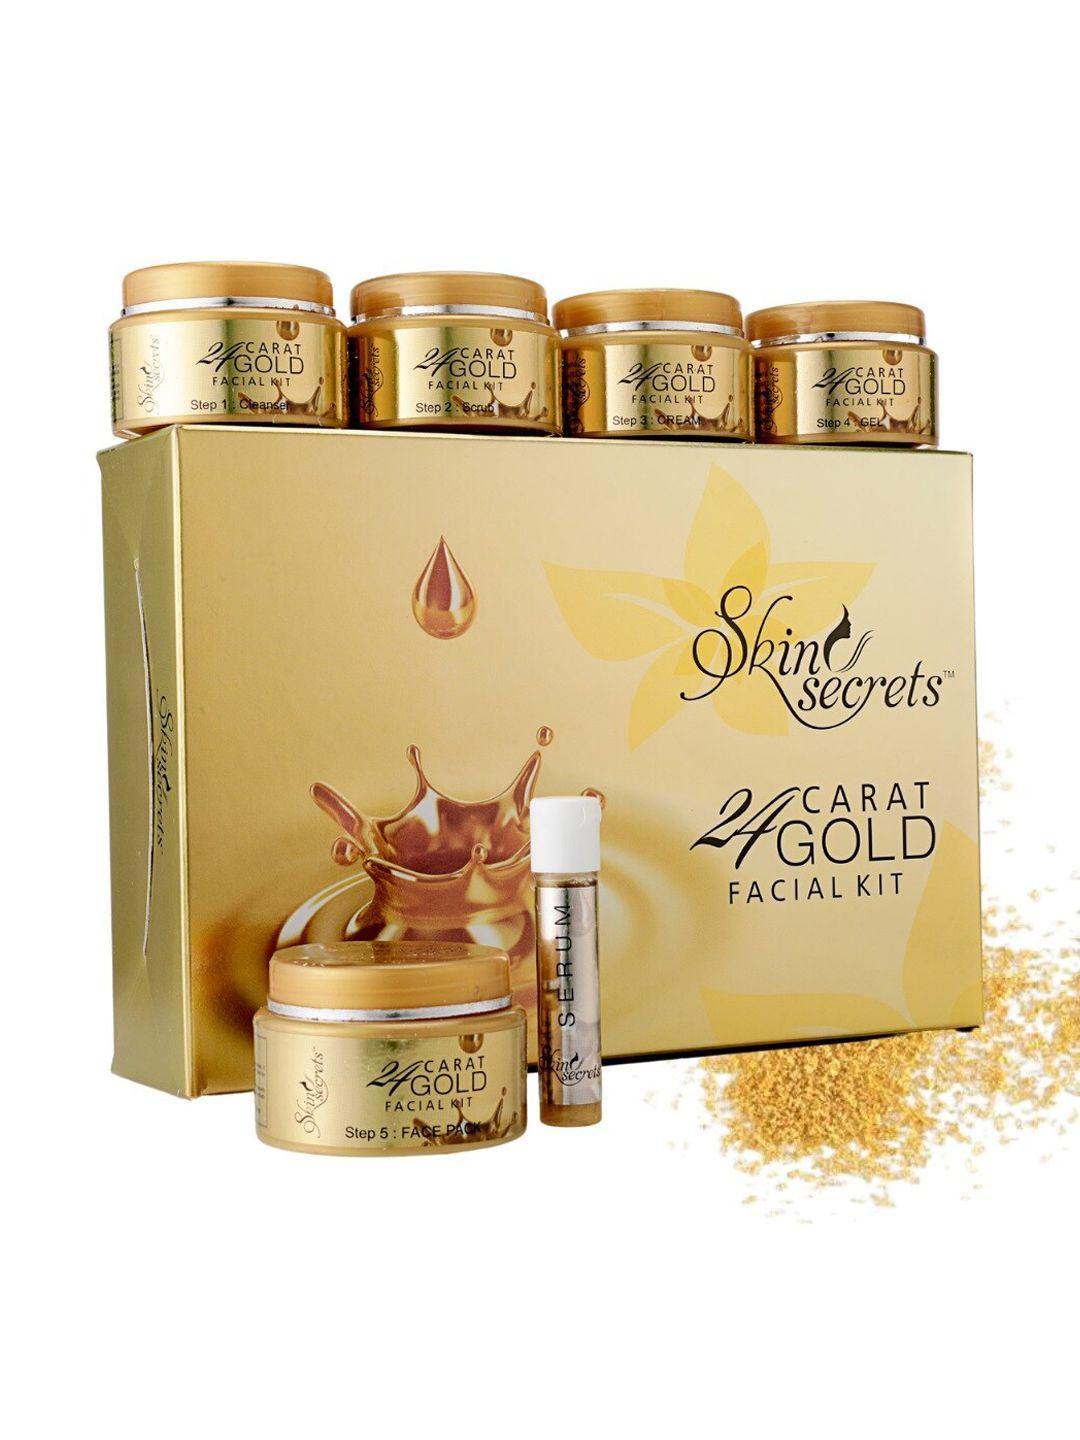 skin secrets 24 carat gold facial kit